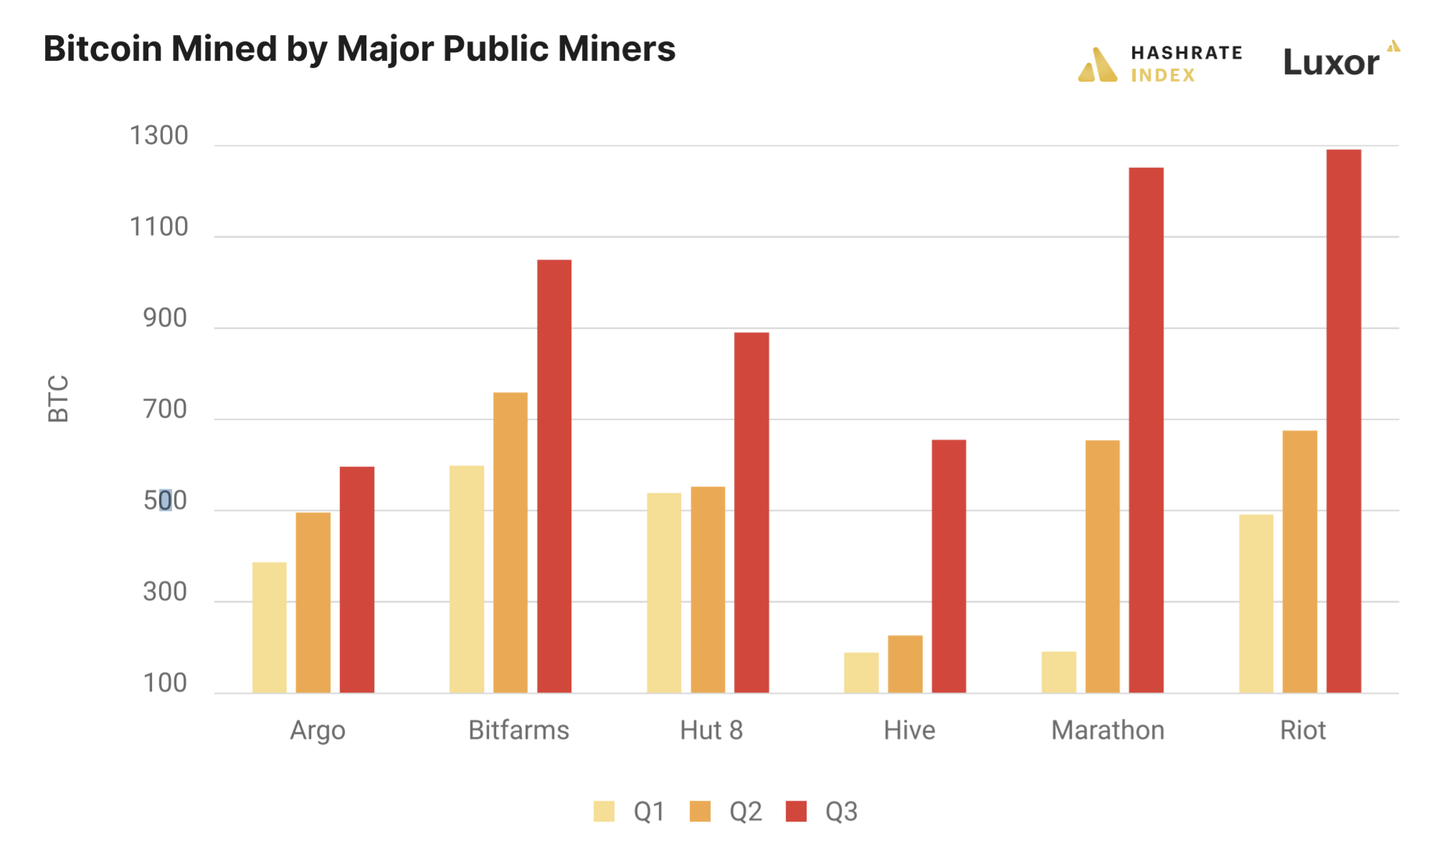 Bitcoin mined by major public miners